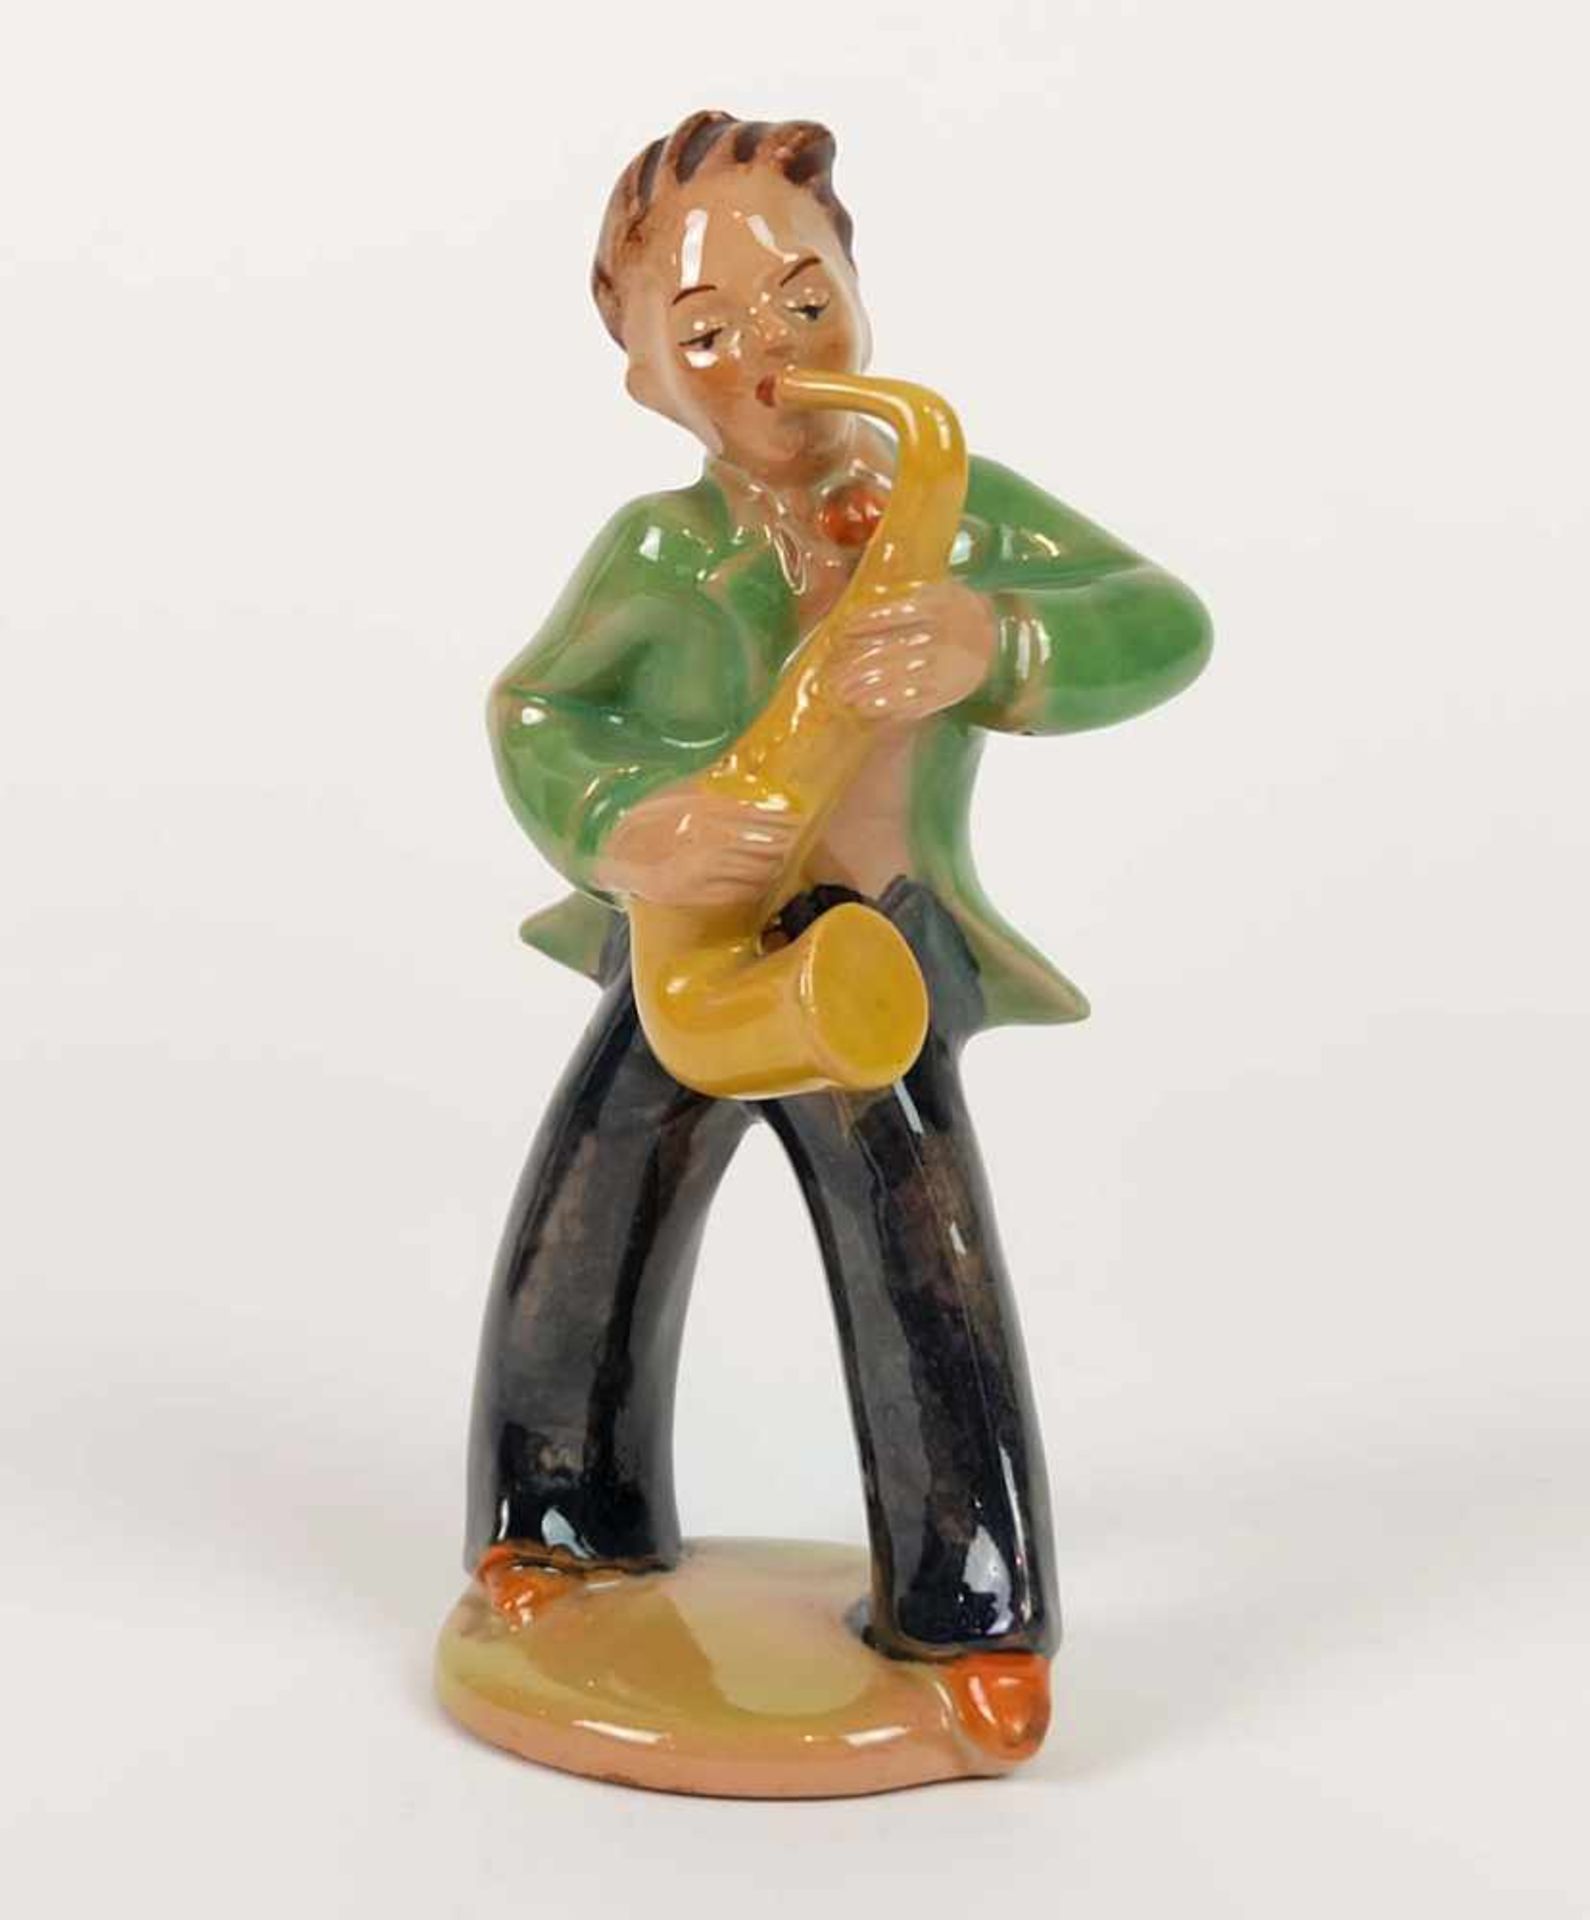 FIGUR, Saxophonspieler, 1930er-Jahre, Keramik, polychromiert, num. 3087, H 14 cm